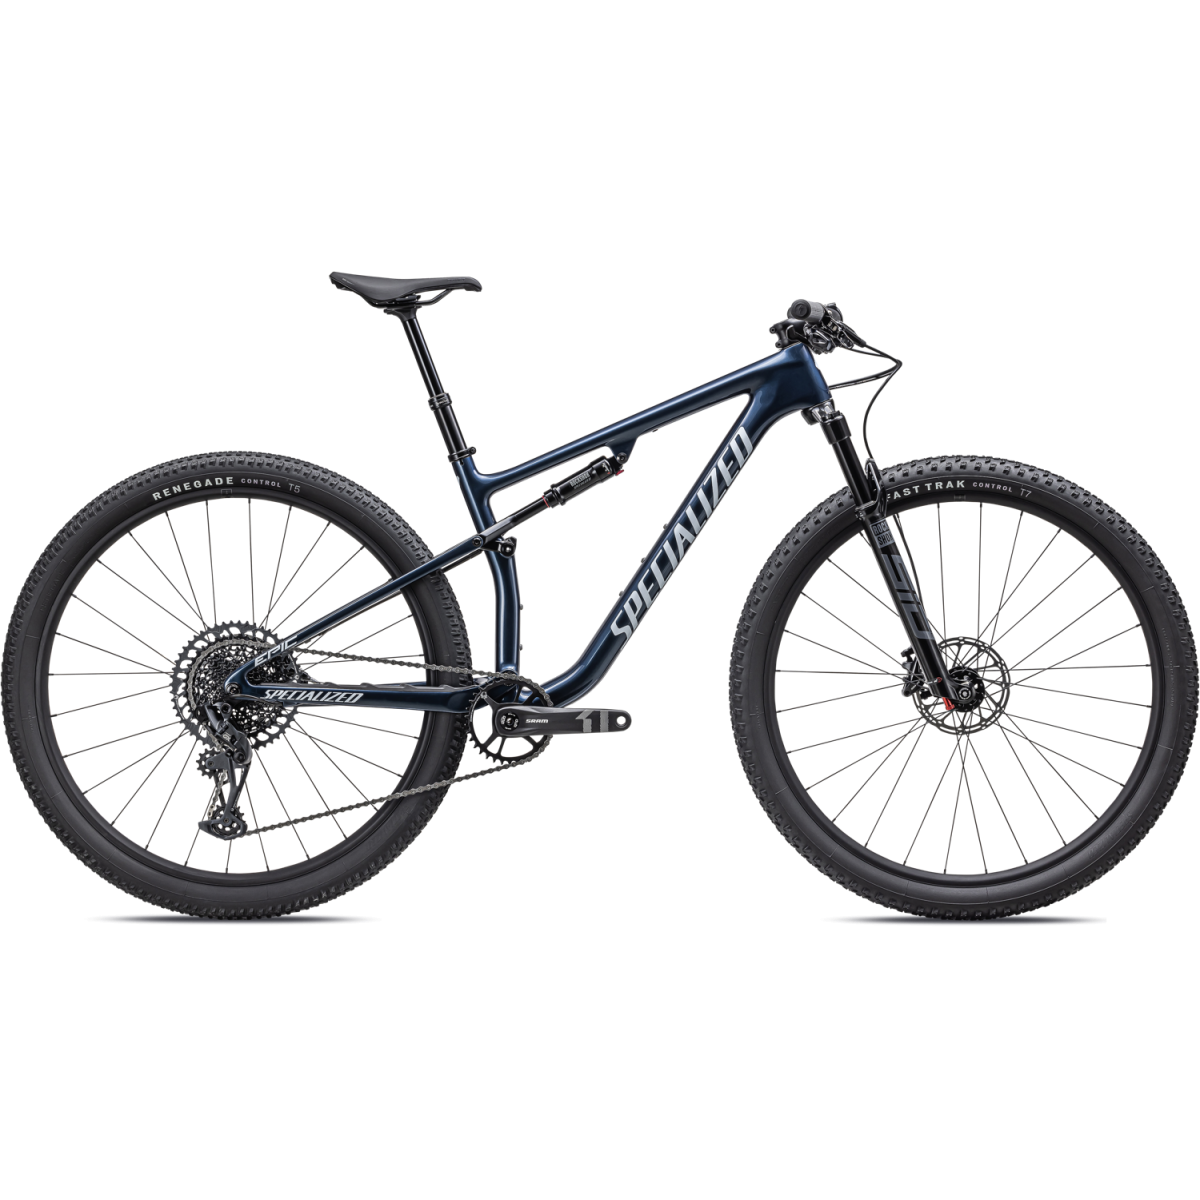 Specialized Epic Comp kalnų dviratis / Gloss Mystic Blue Metallic